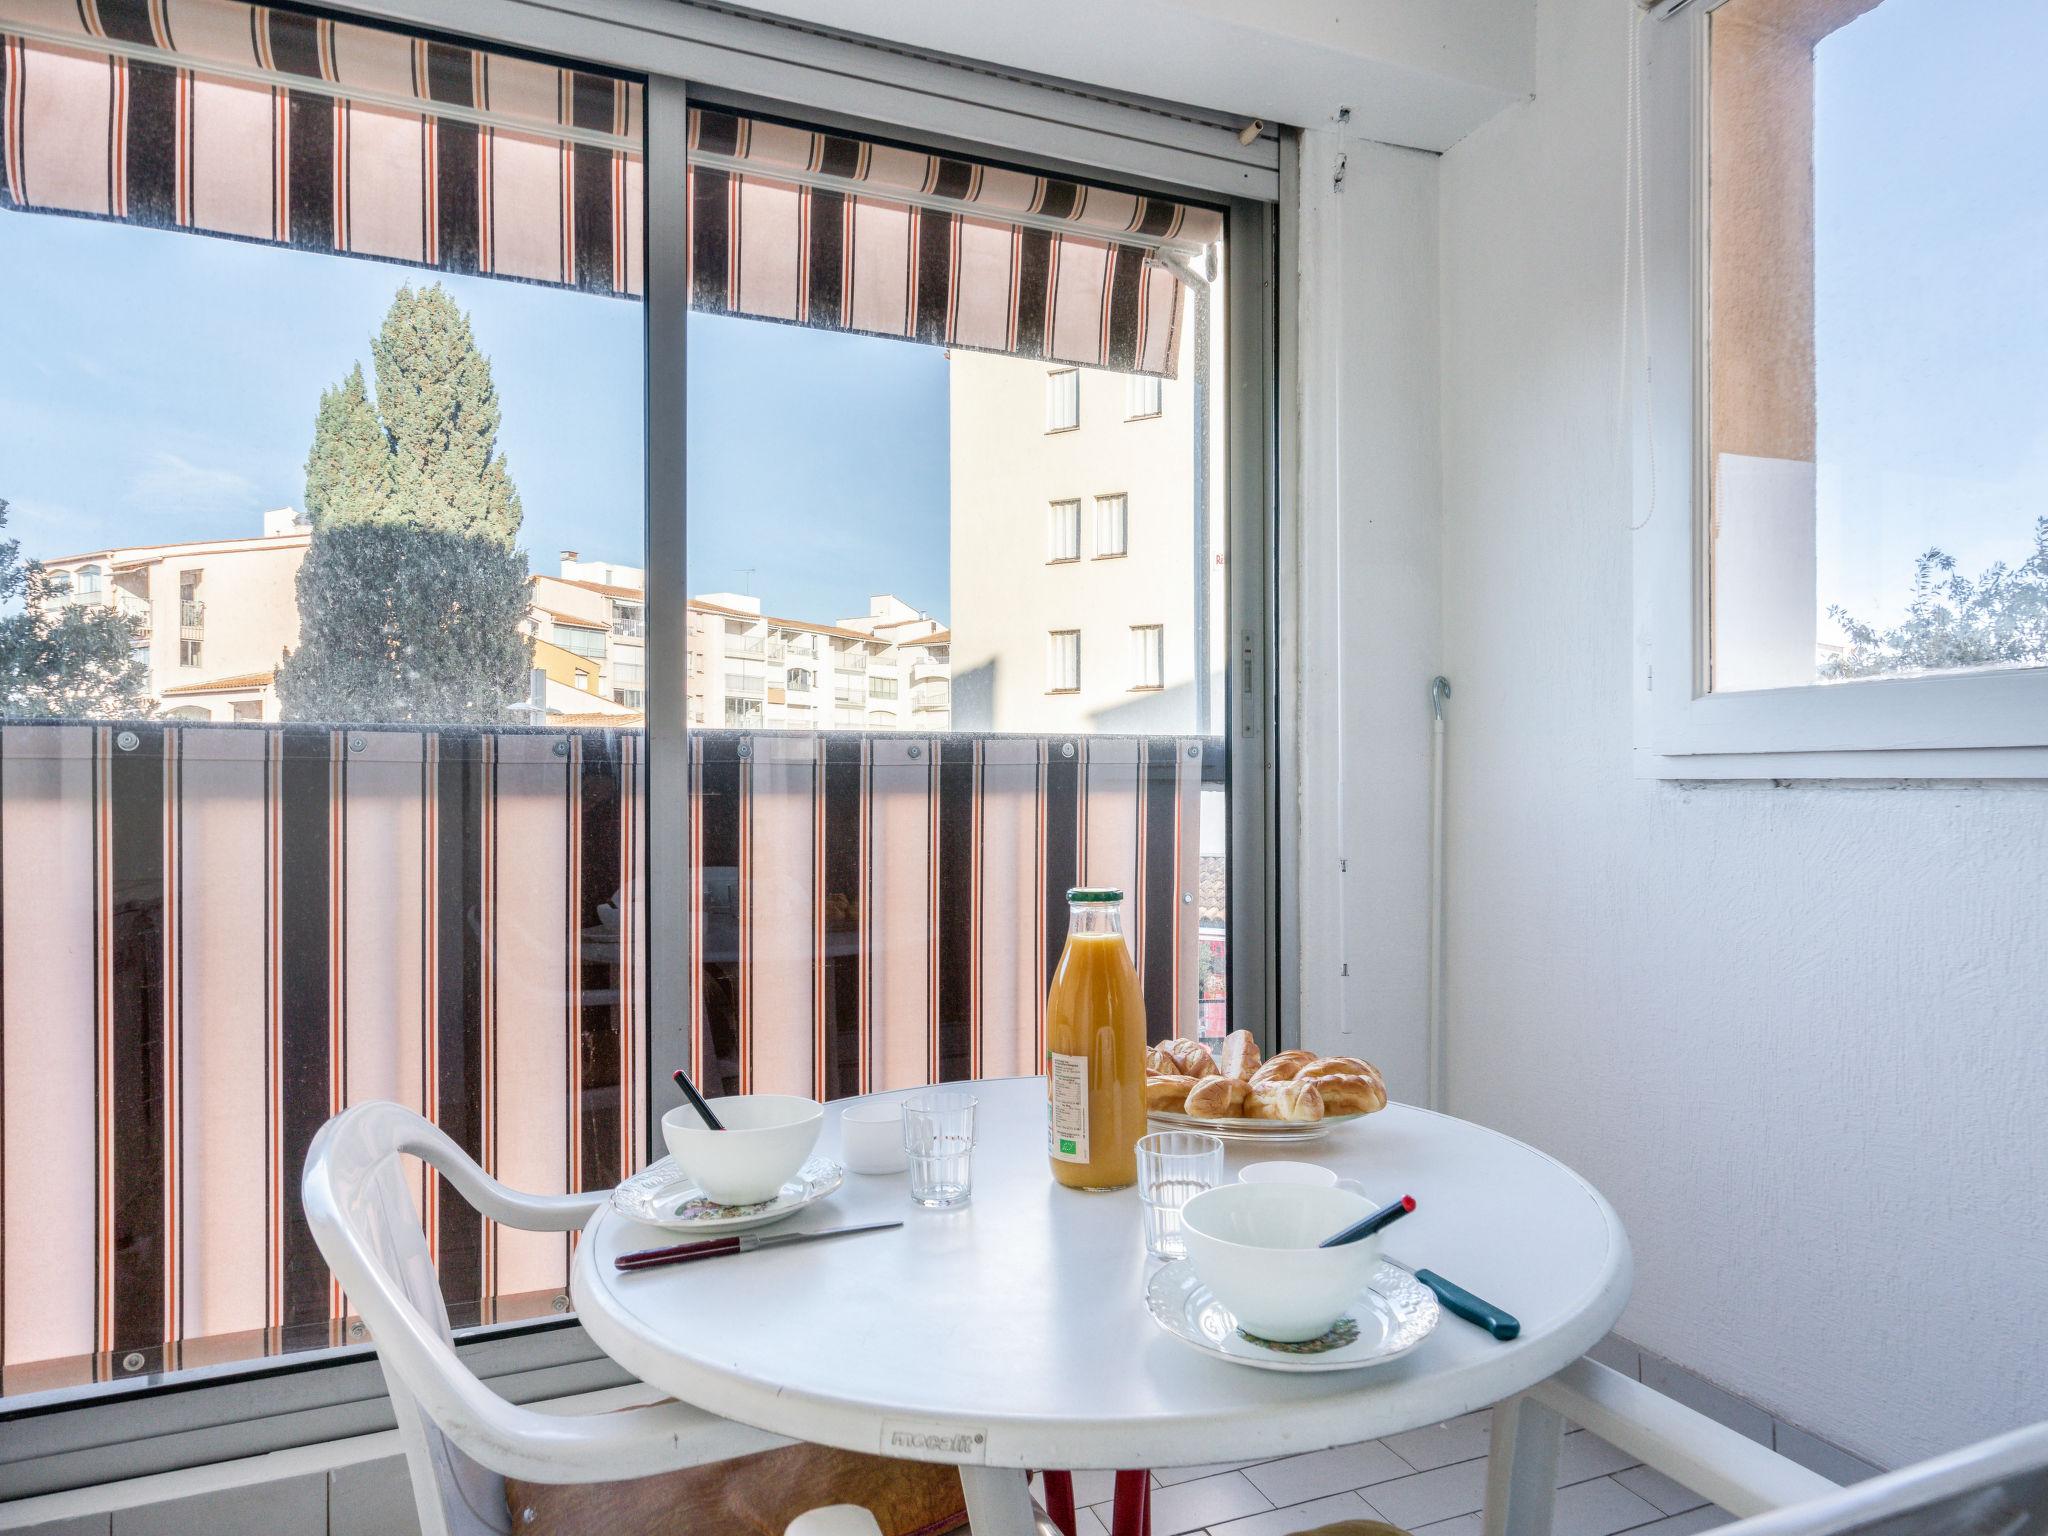 Foto 1 - Apartment in Agde mit blick aufs meer